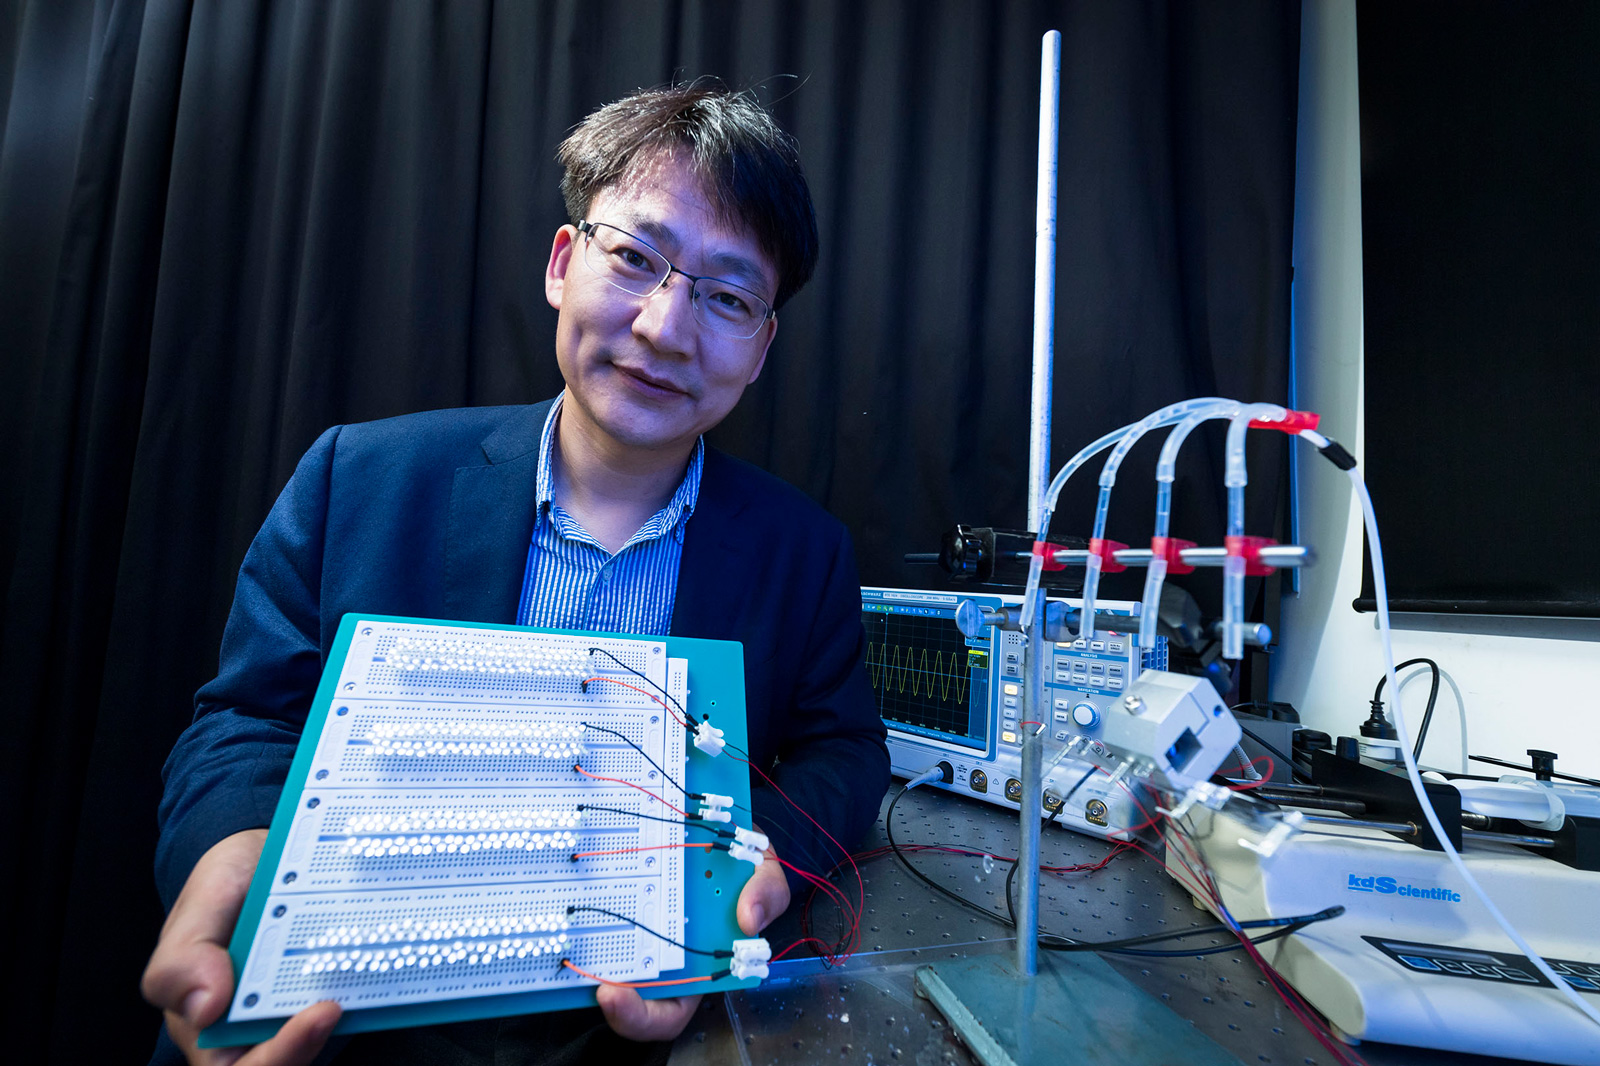 Professor Wang Zuankai of CityU won the 2020 Xplorer Prize organised by the Tencent Foundation.